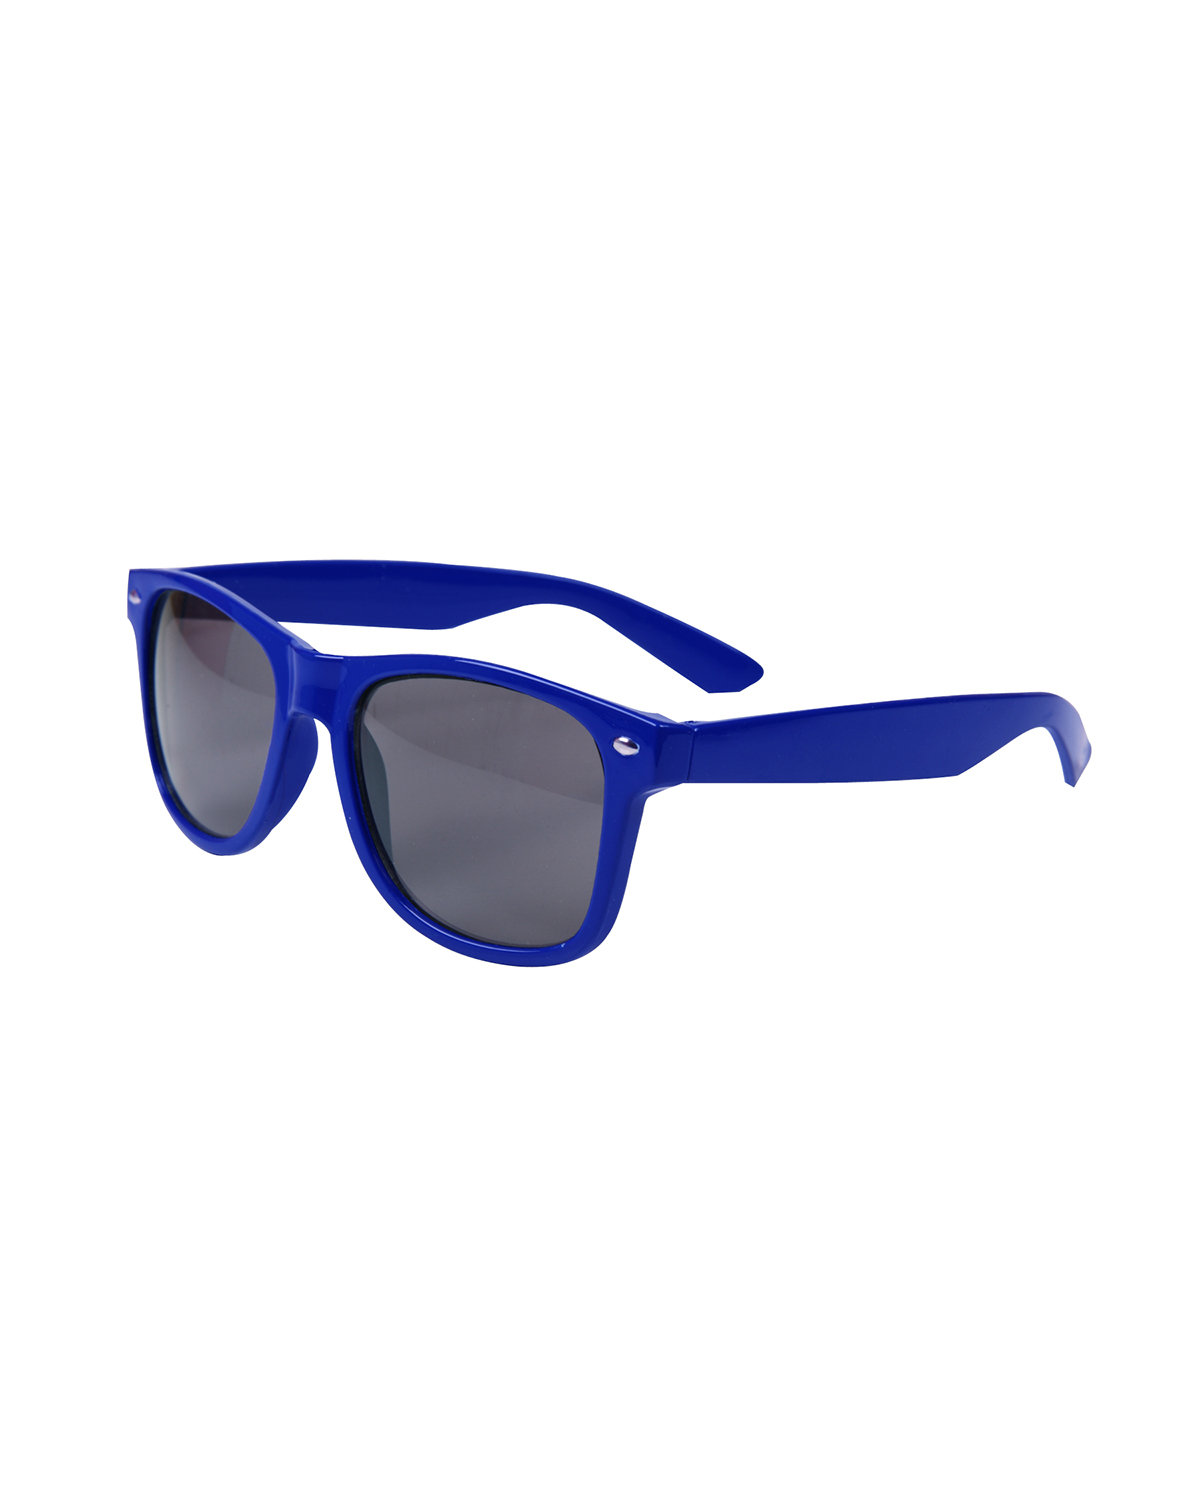 Prime Line Glossy Sunglasses reflex blue 